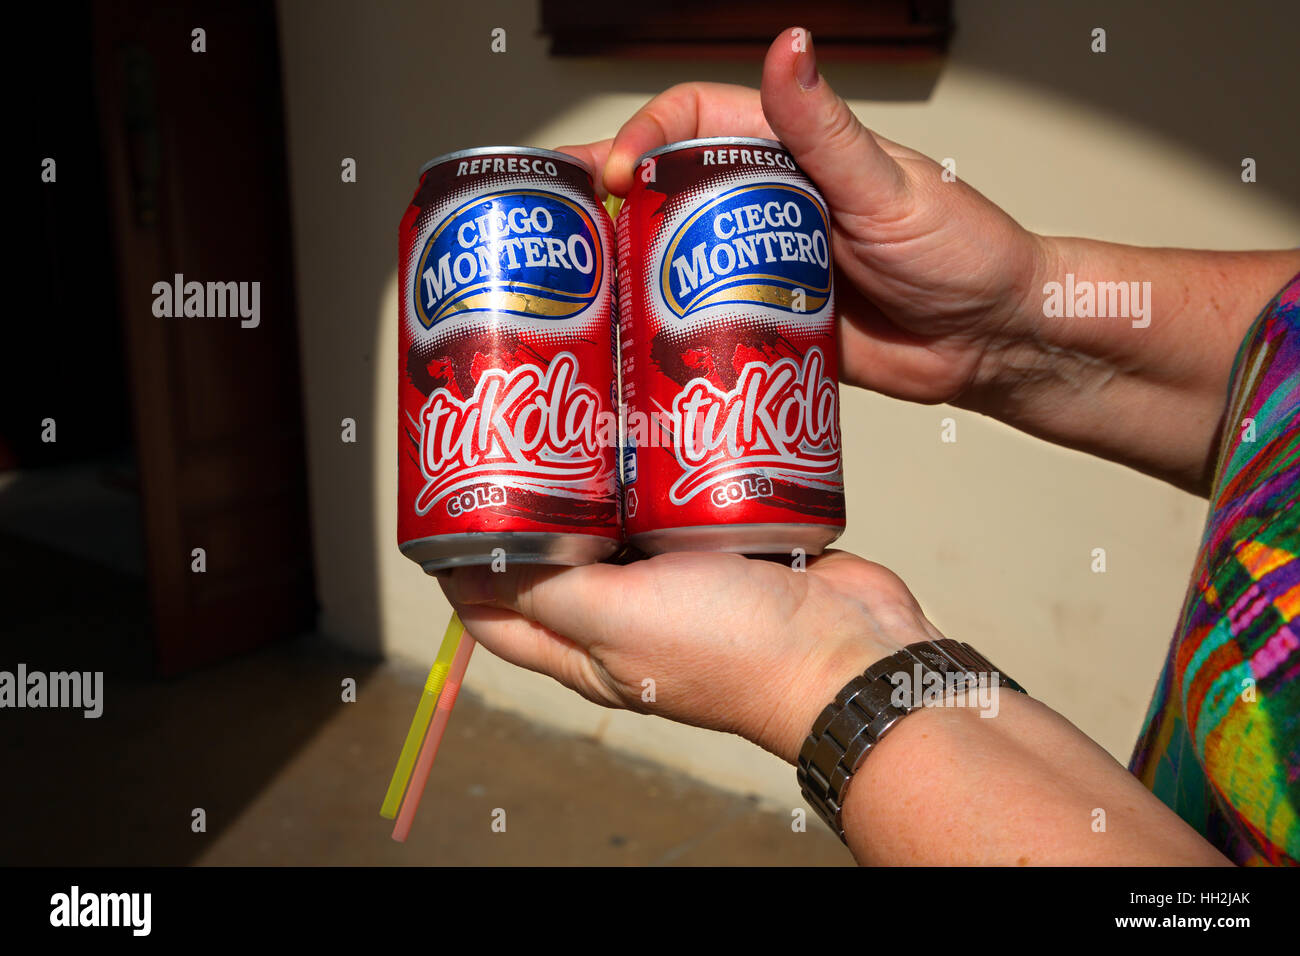 Kubanische Coca-cola namens "Ciego Montero" - zu verkaufen in Kuba Stockfoto